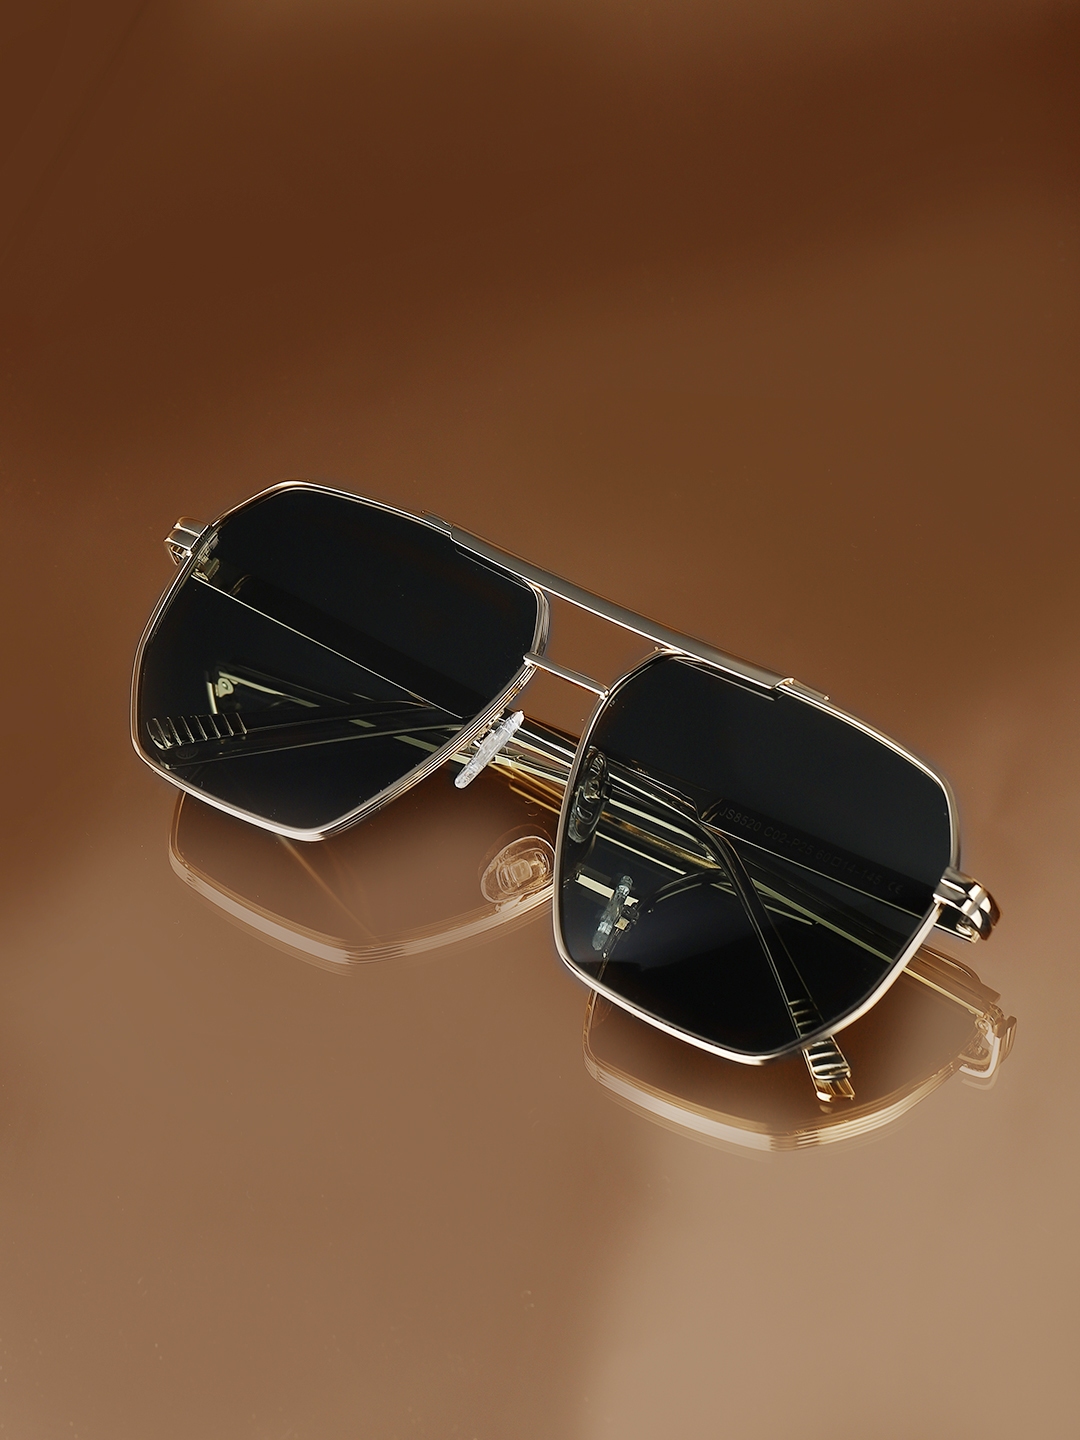 Buy Carlton London Premium Men Rectangle Sunglasses With Polarised & UV  Protected Lens CLSM138 - Sunglasses for Men 22057226